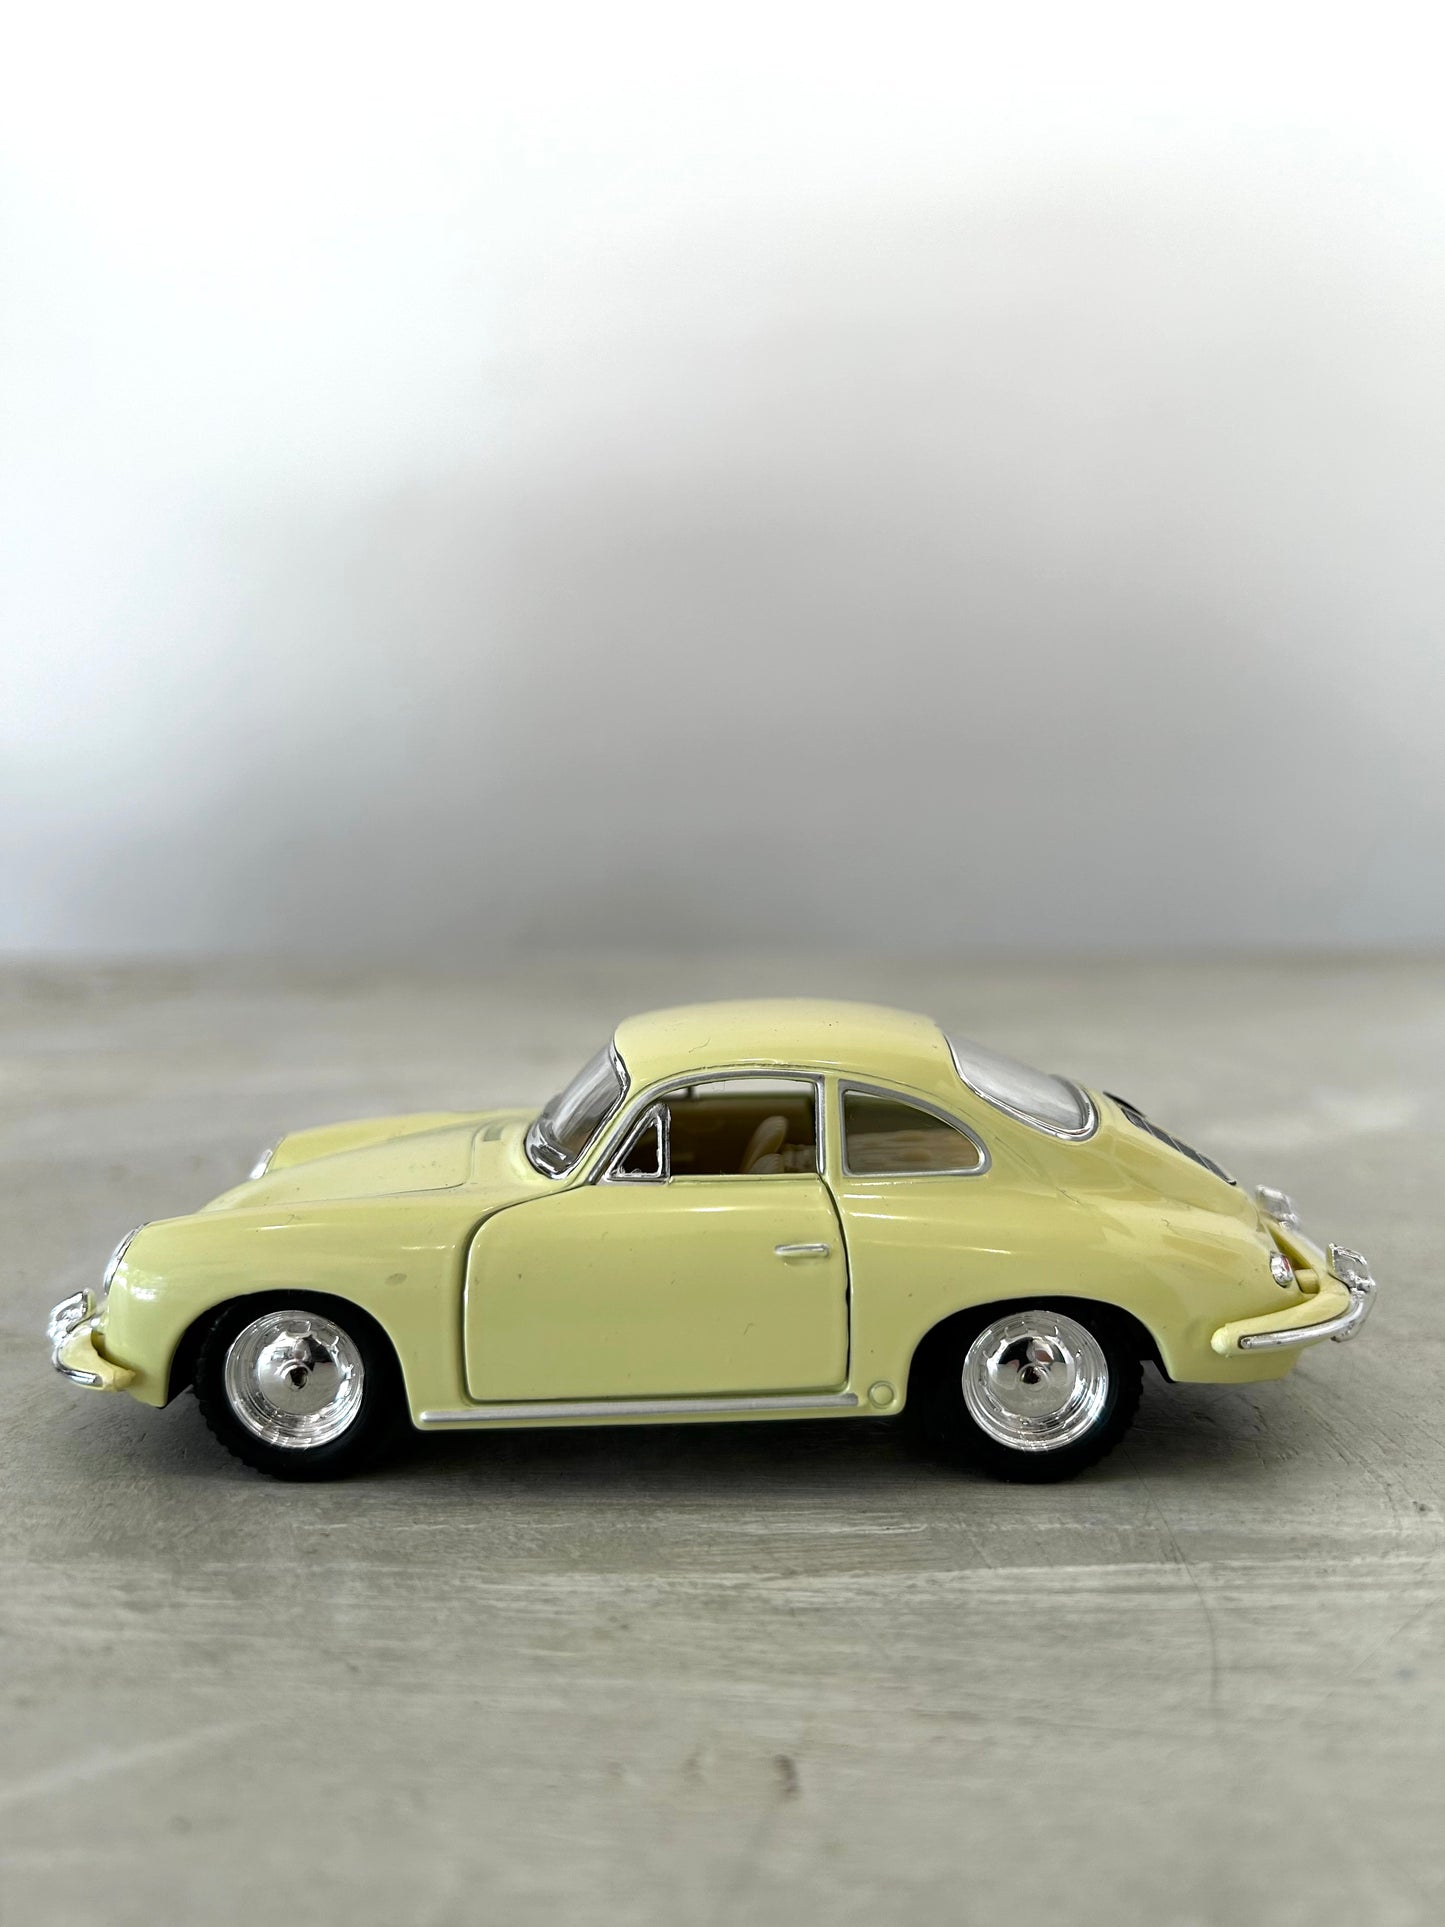 Voiture de collection Porsche 356 beige